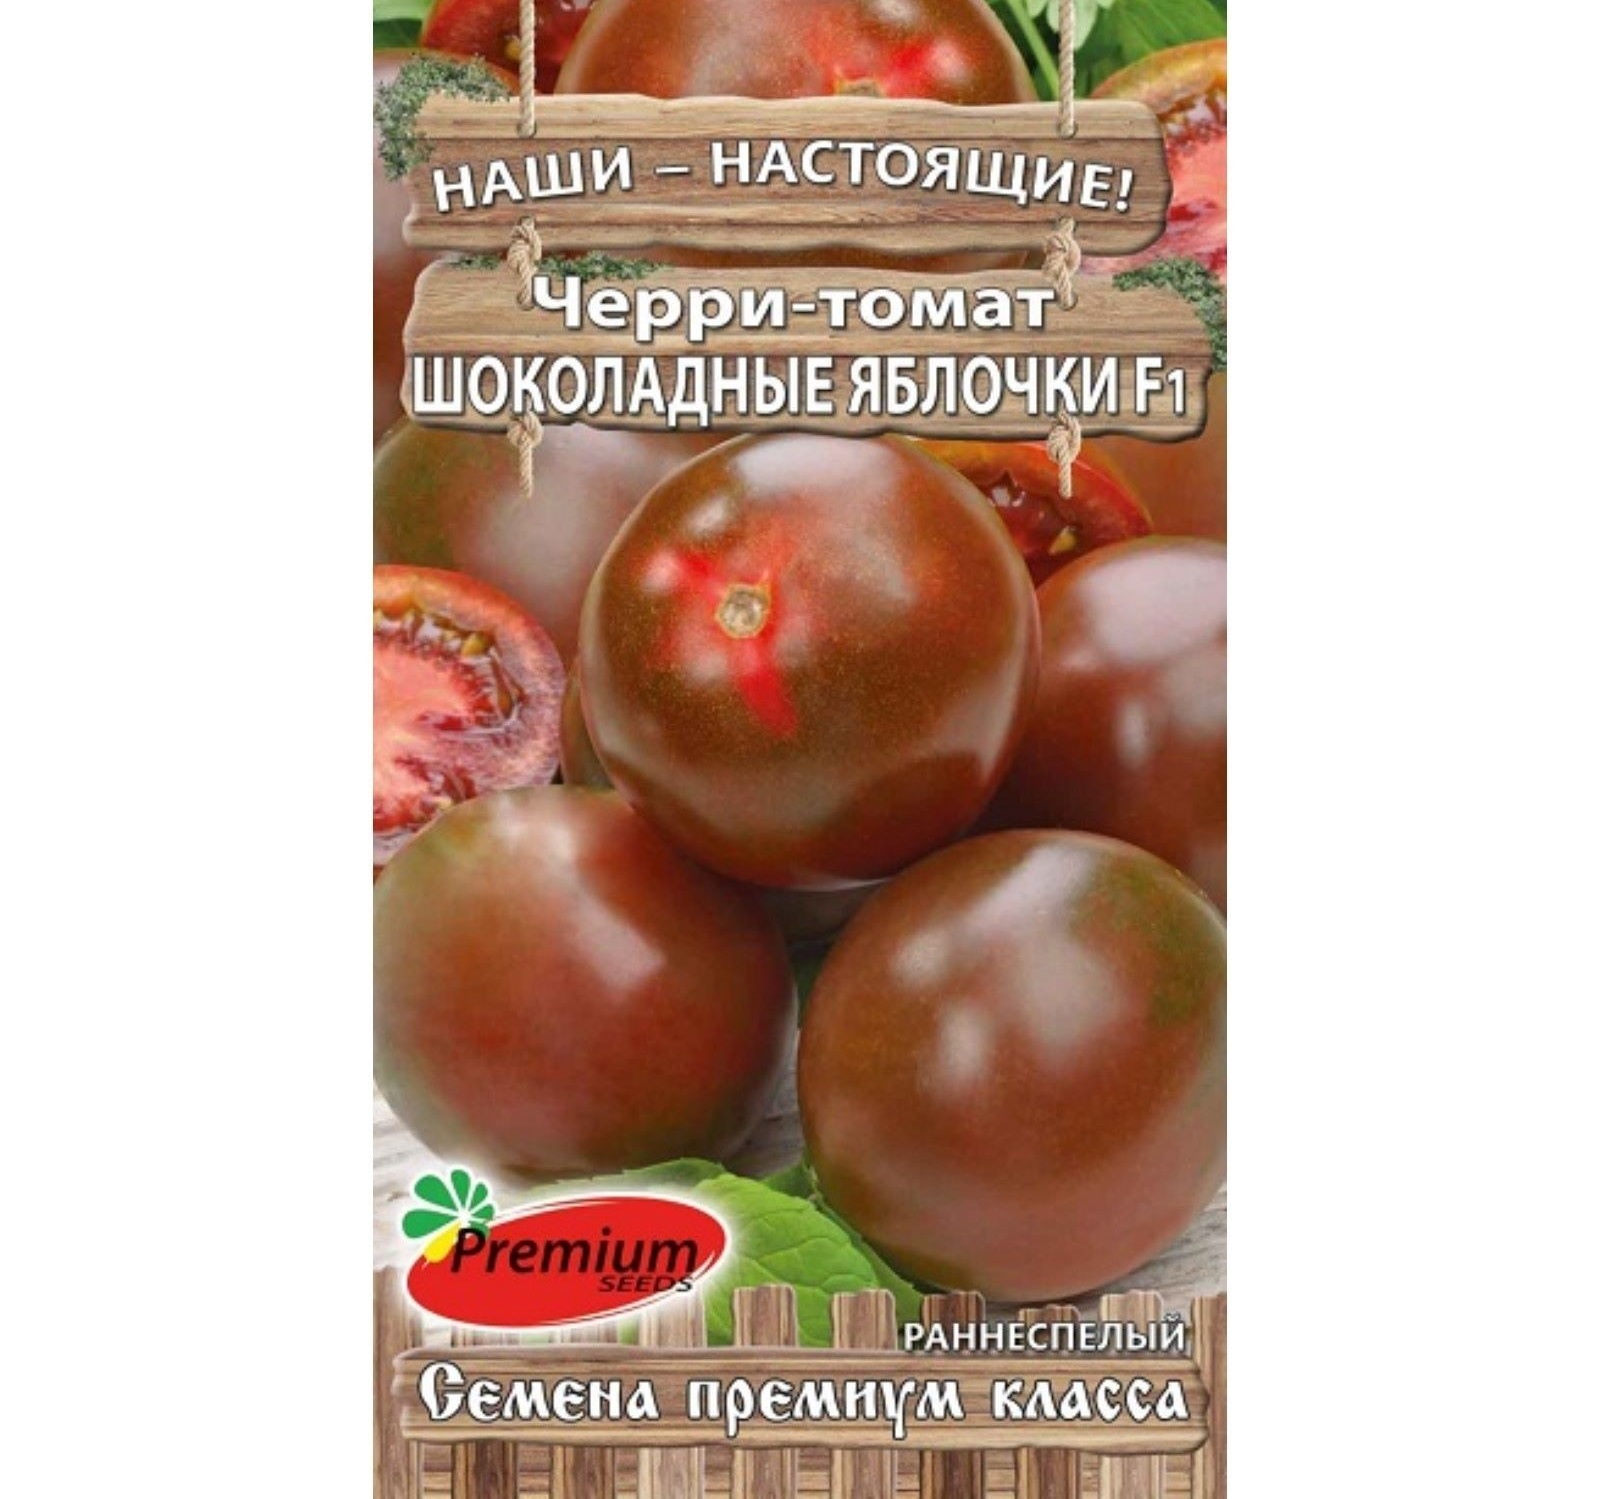 Семена томат Шоколадные яблочки F1 Premium seeds 446828 1 уп.